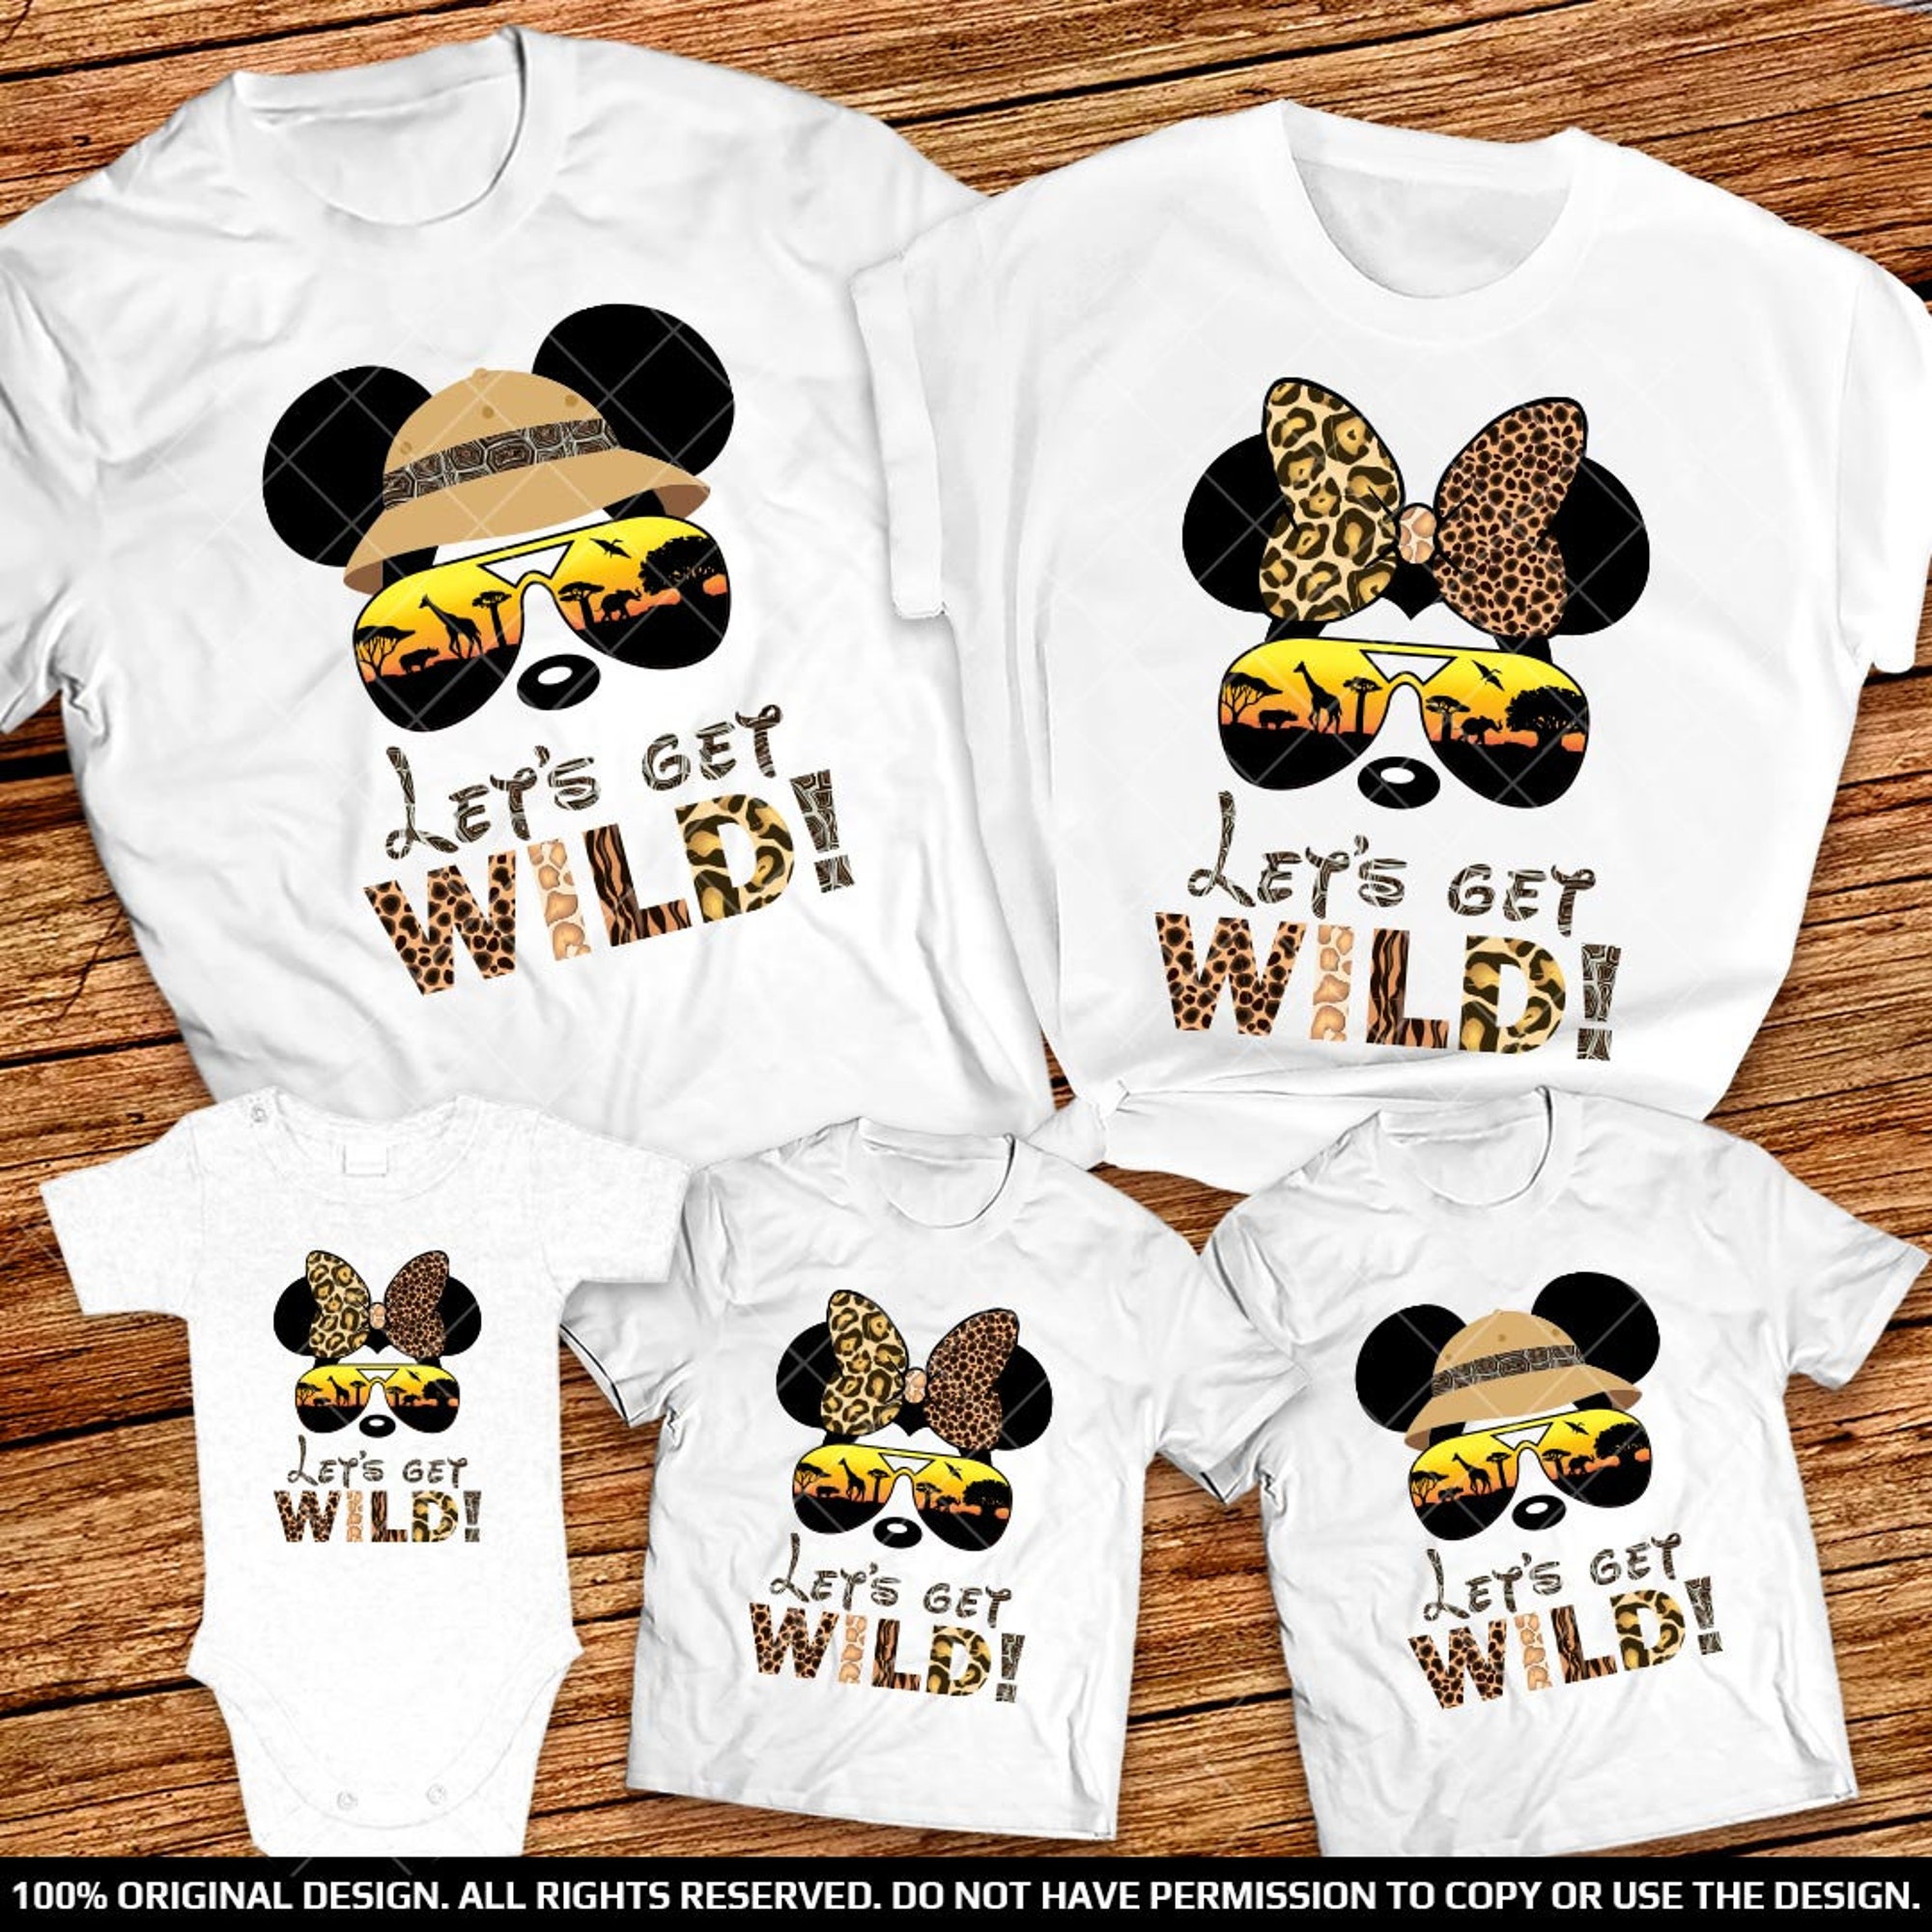 Animal Kingdom Let's Get Wild family shirts, Disney Safari